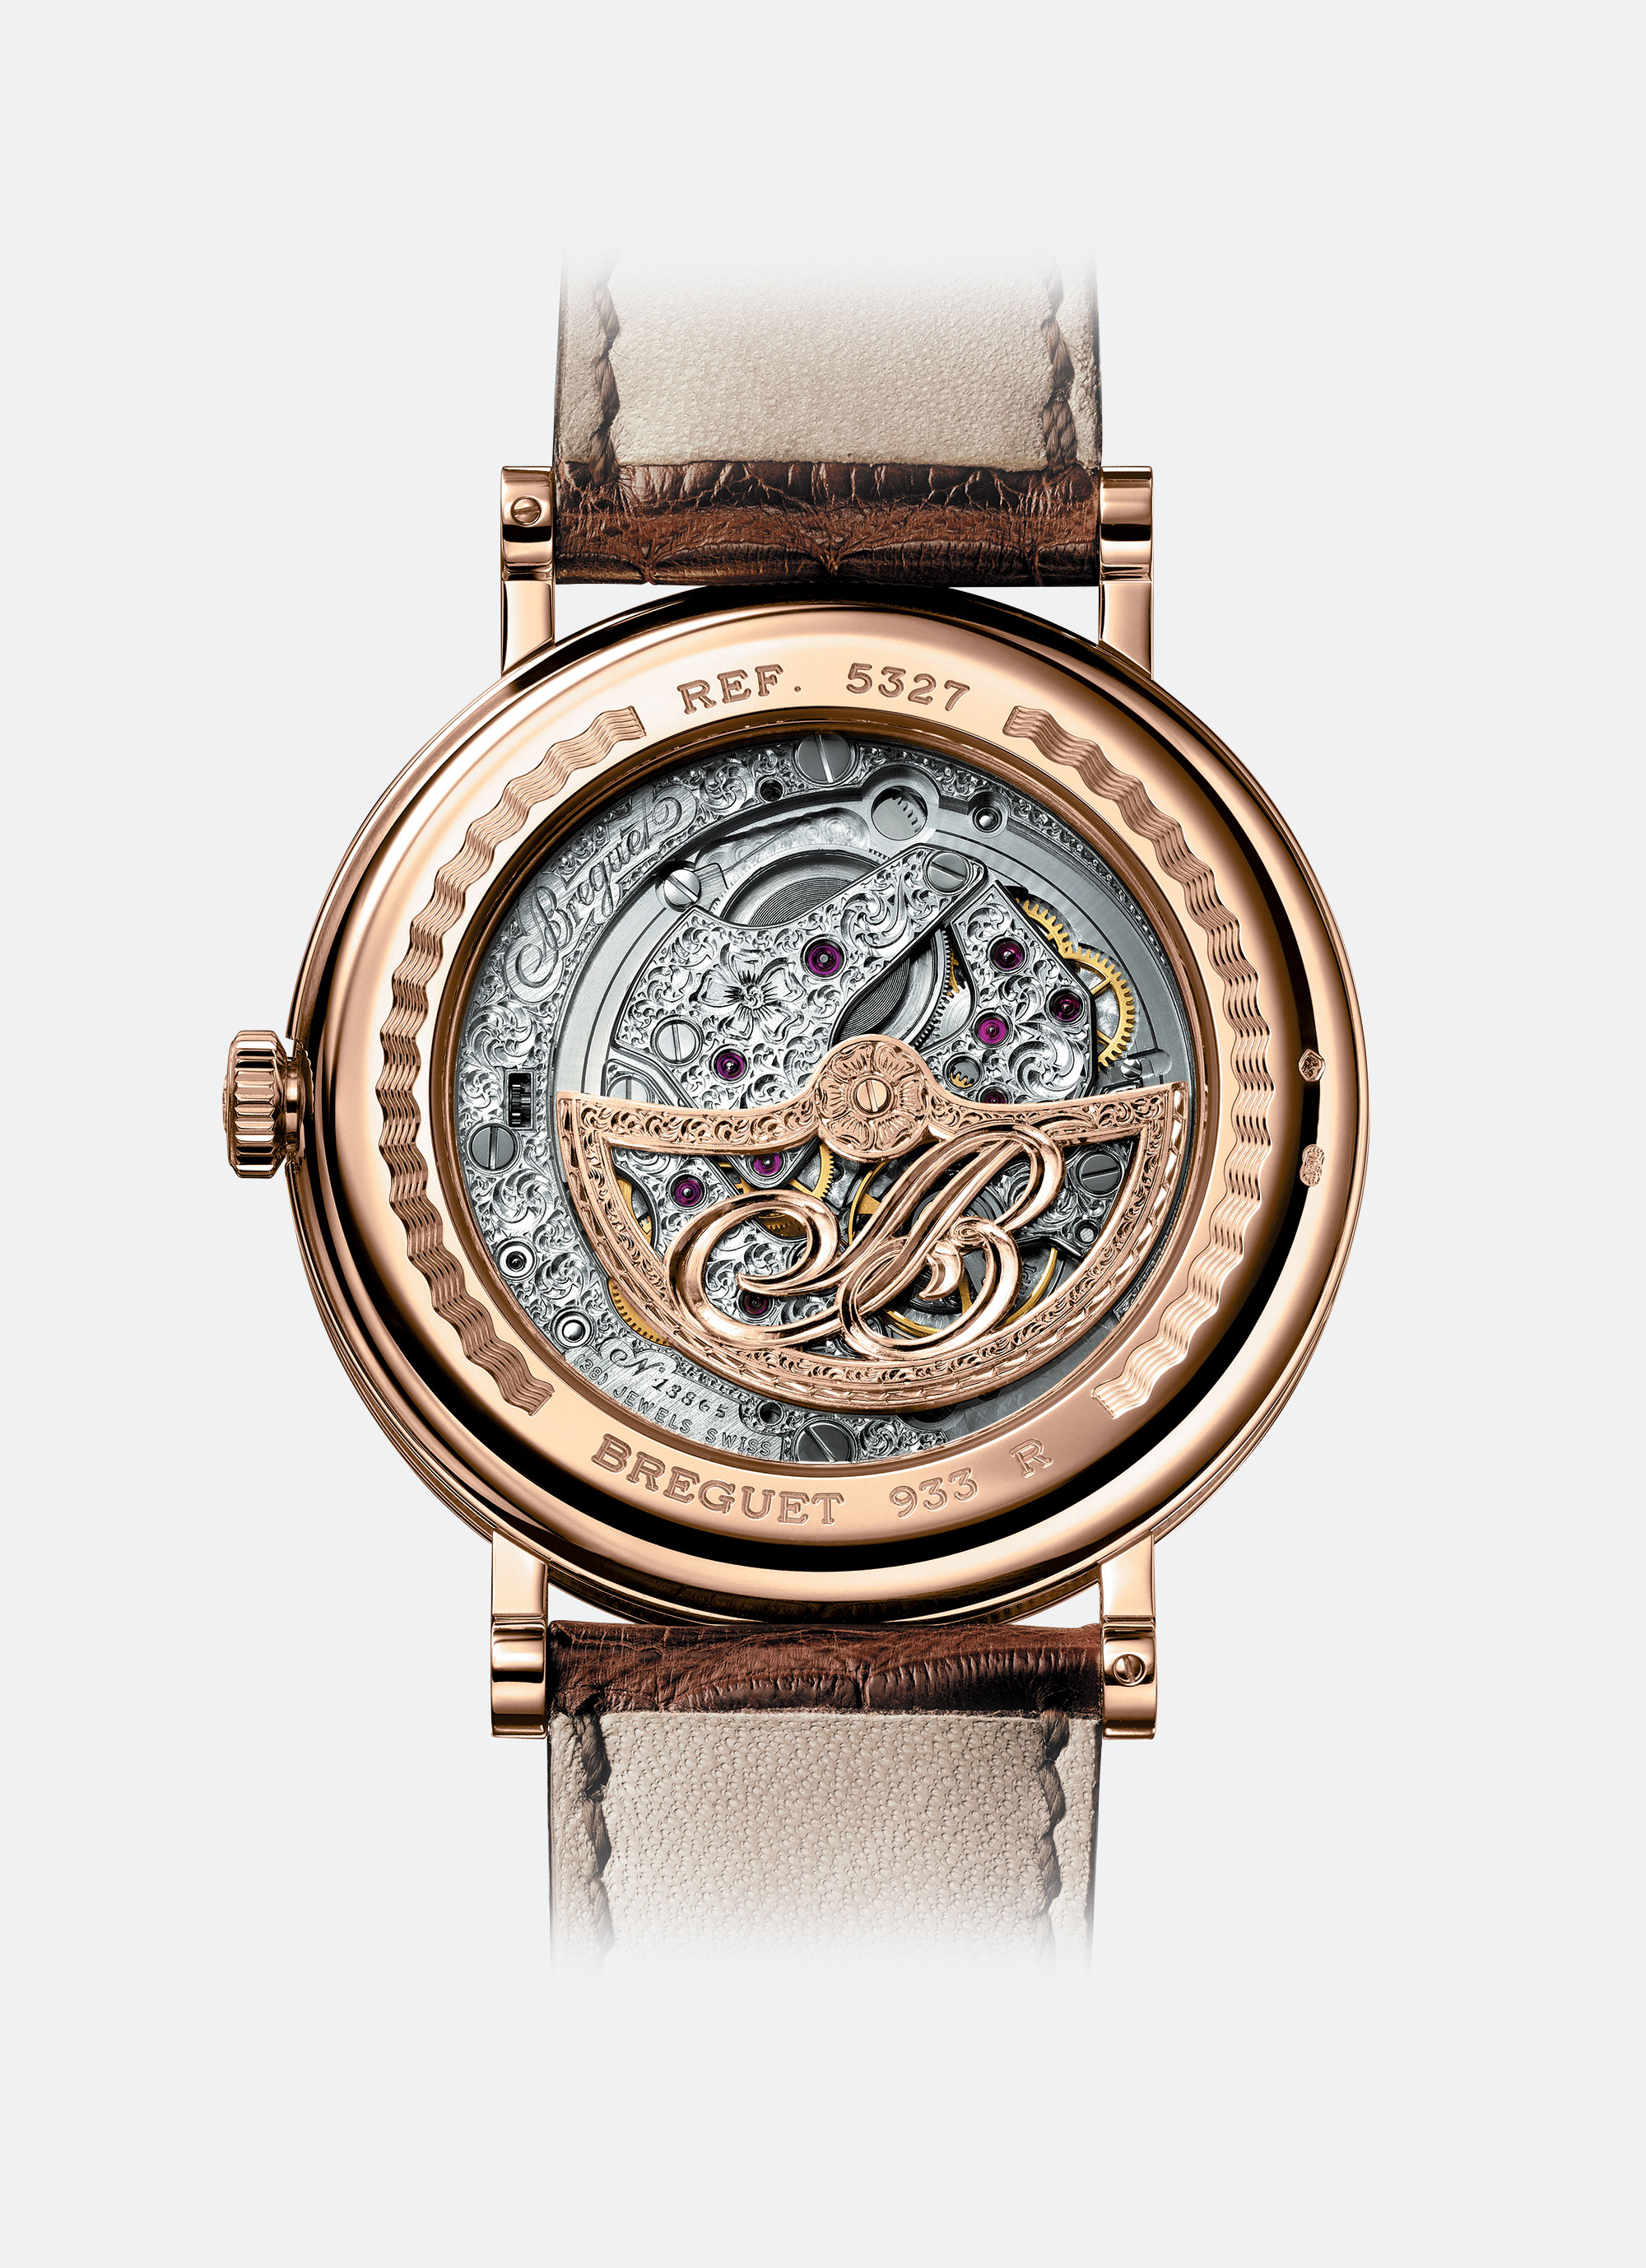 Cartier Watch Replica High Quality